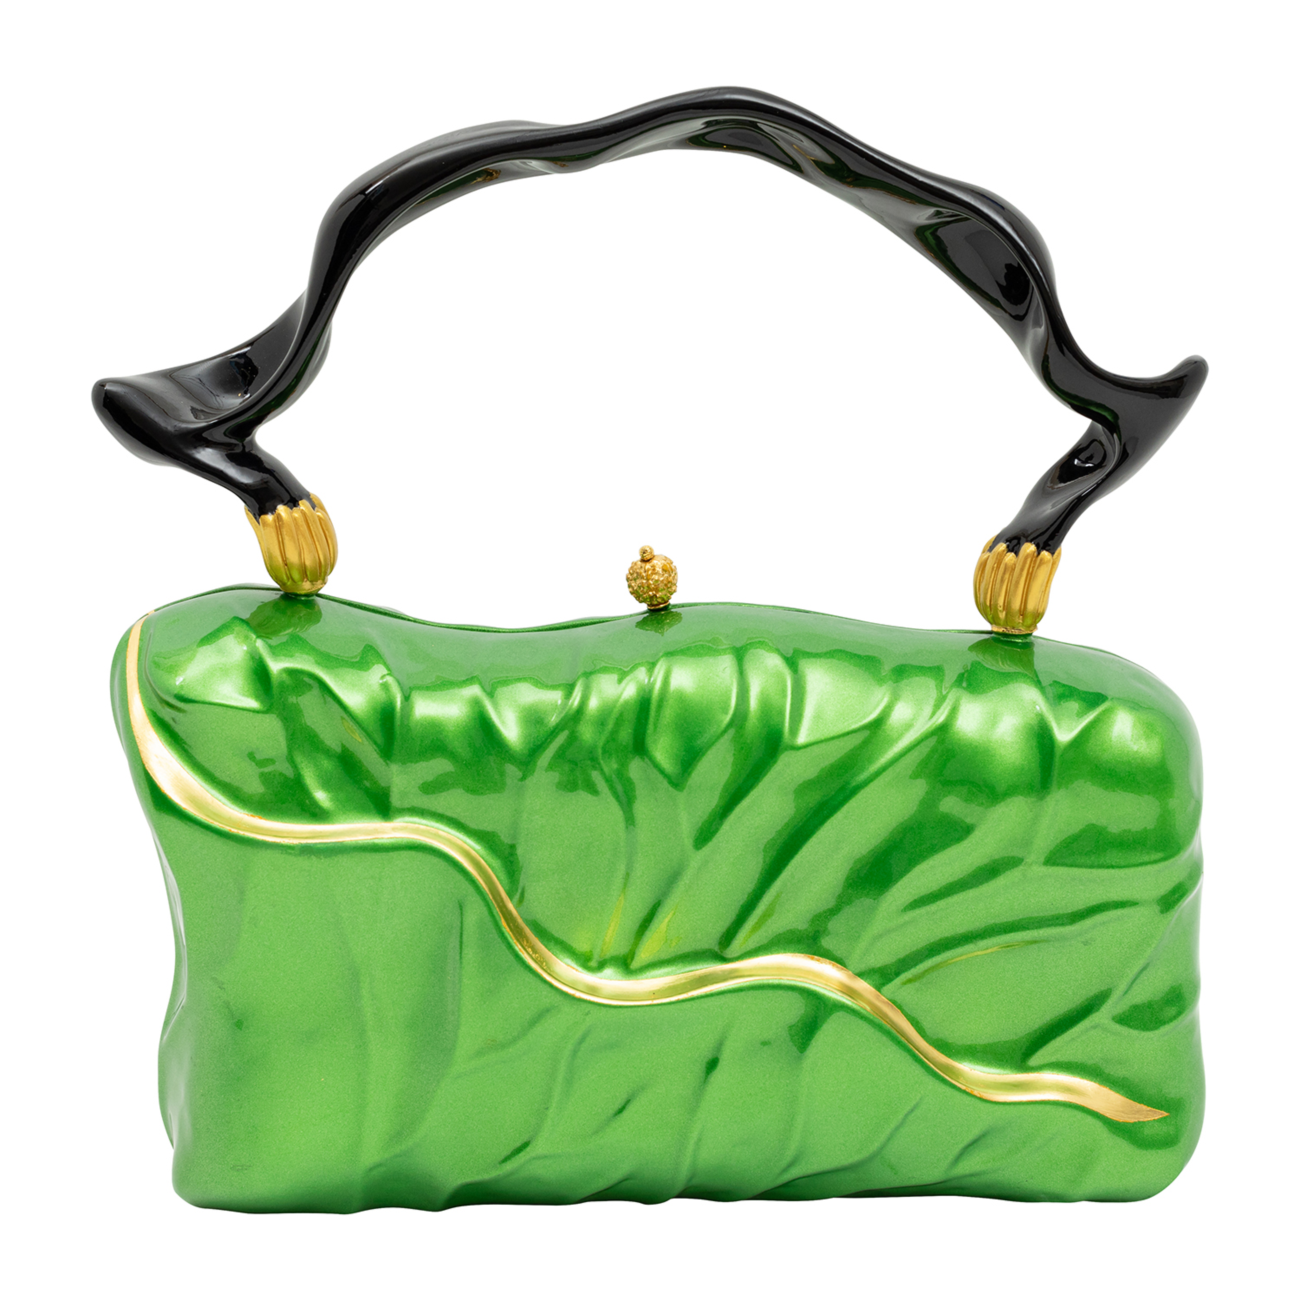 The Lotus Handbag